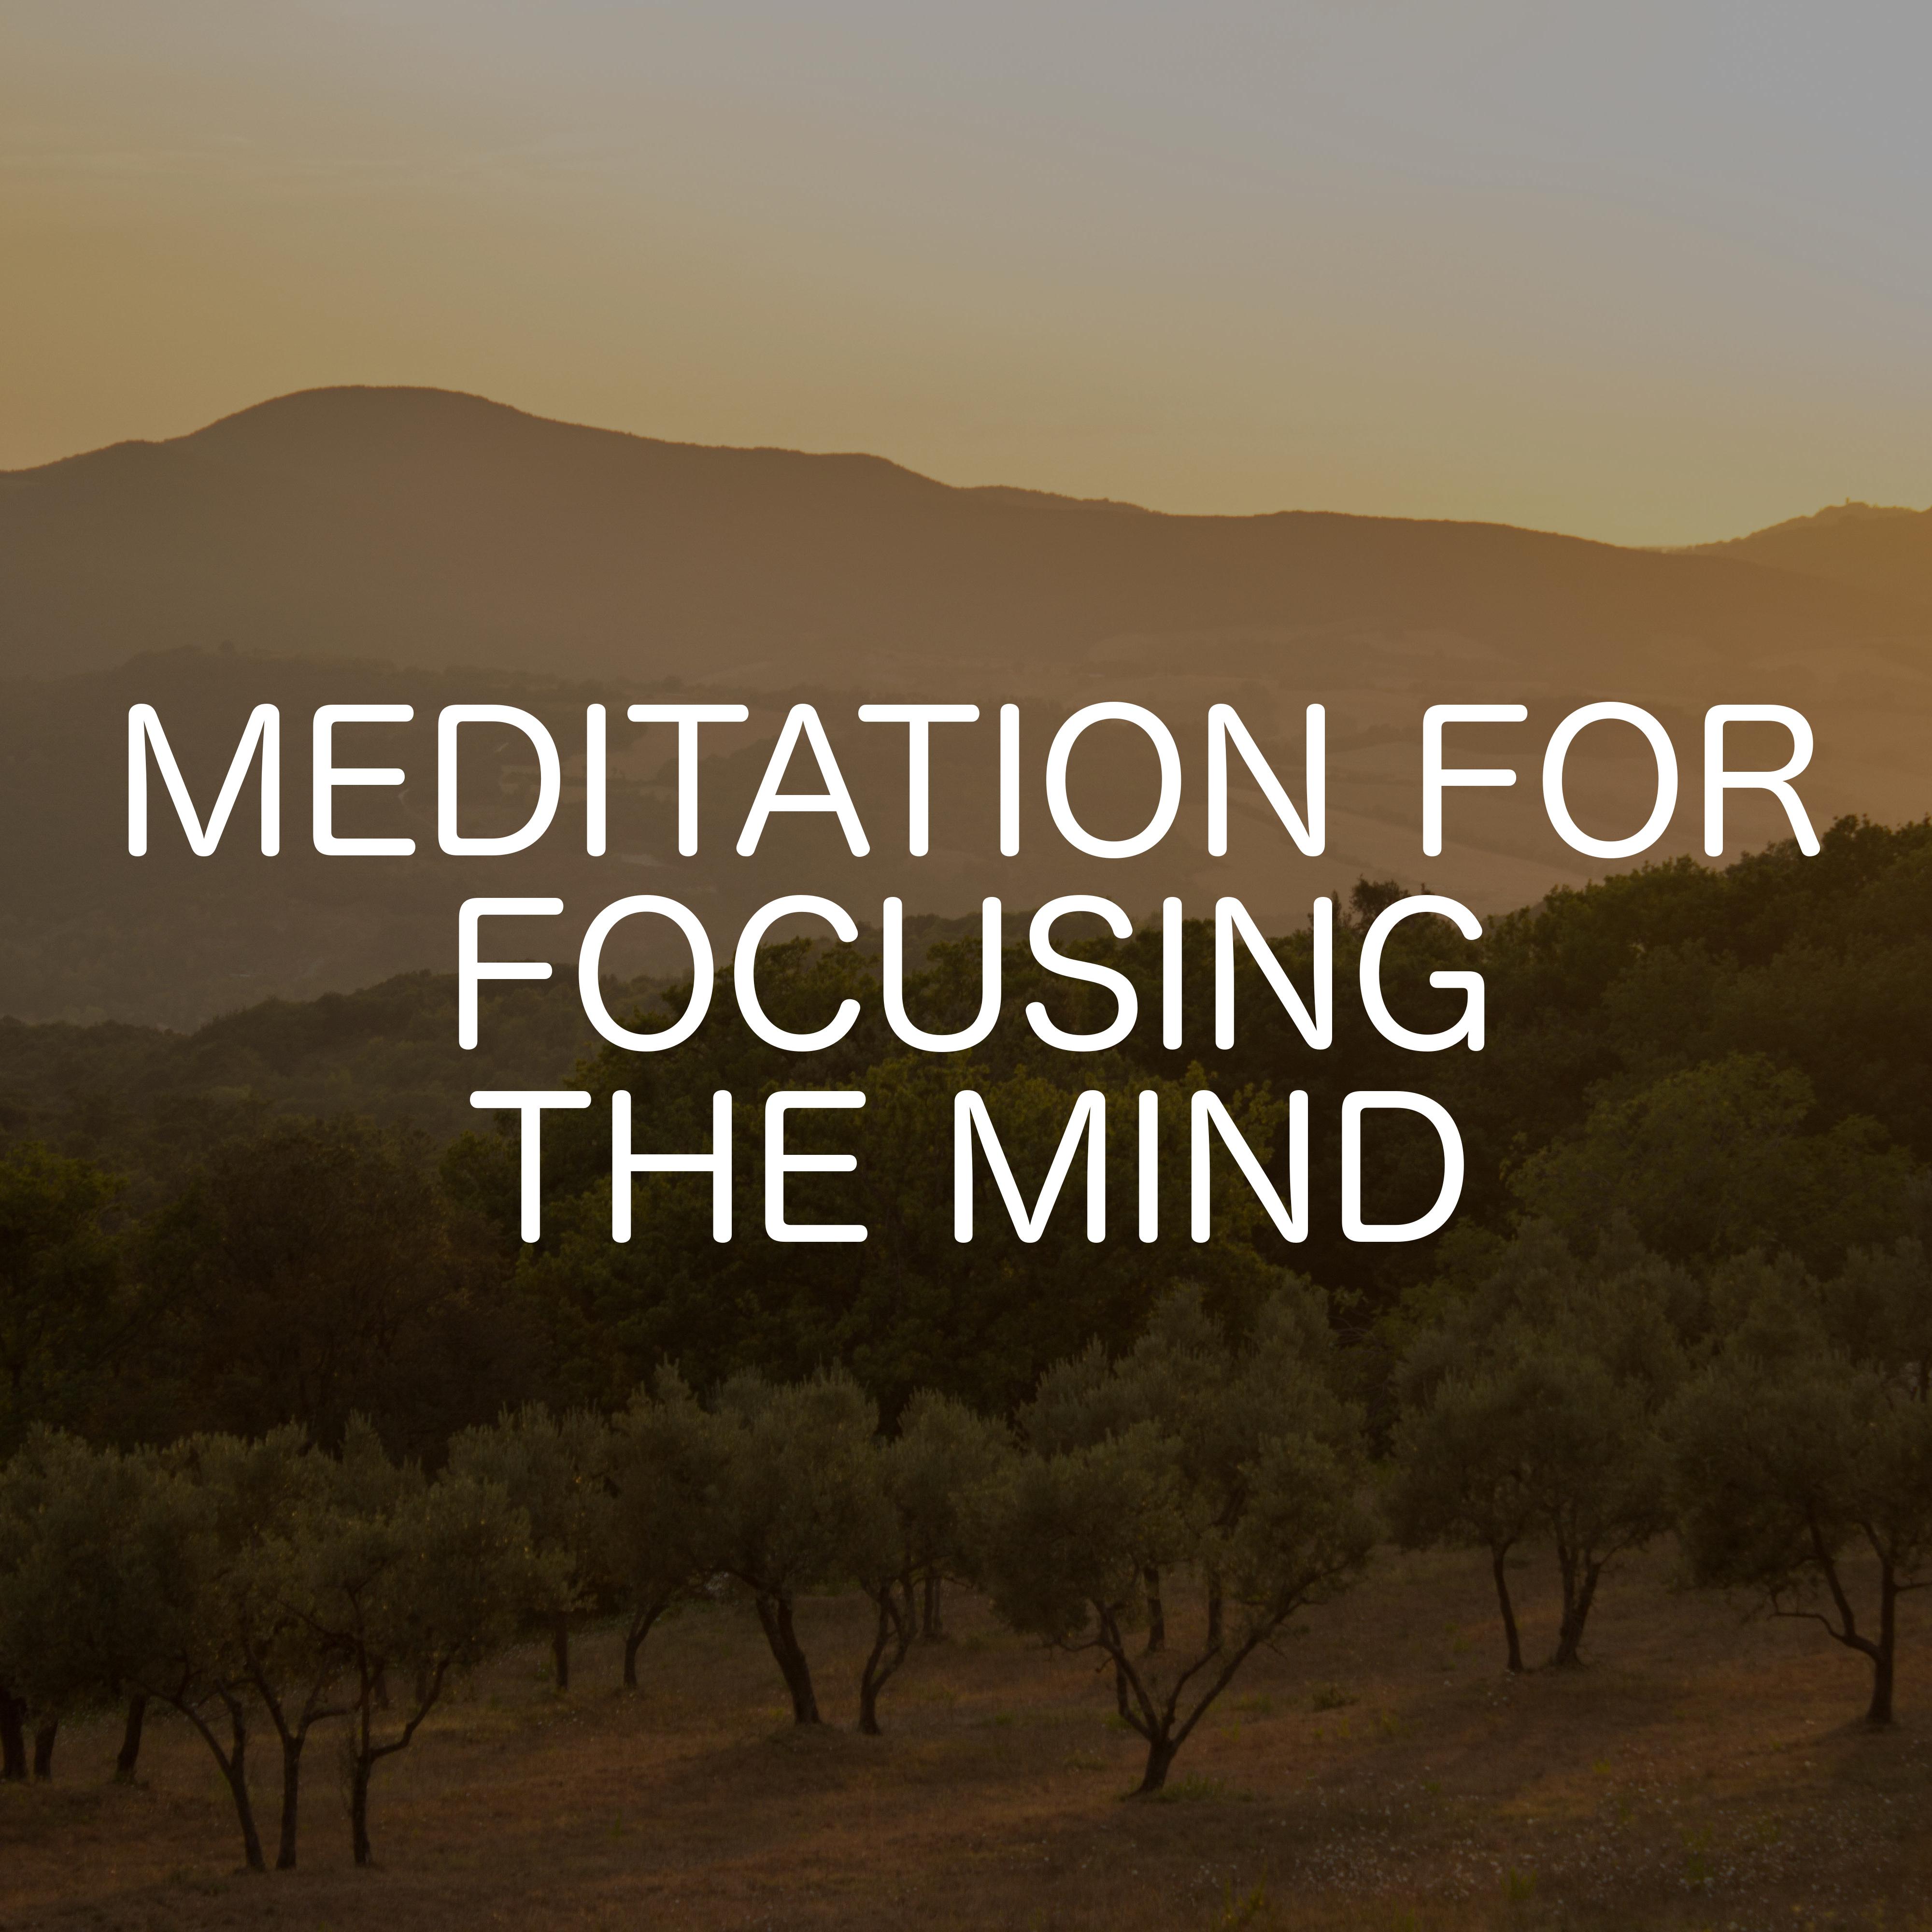 Meditation Vibrations